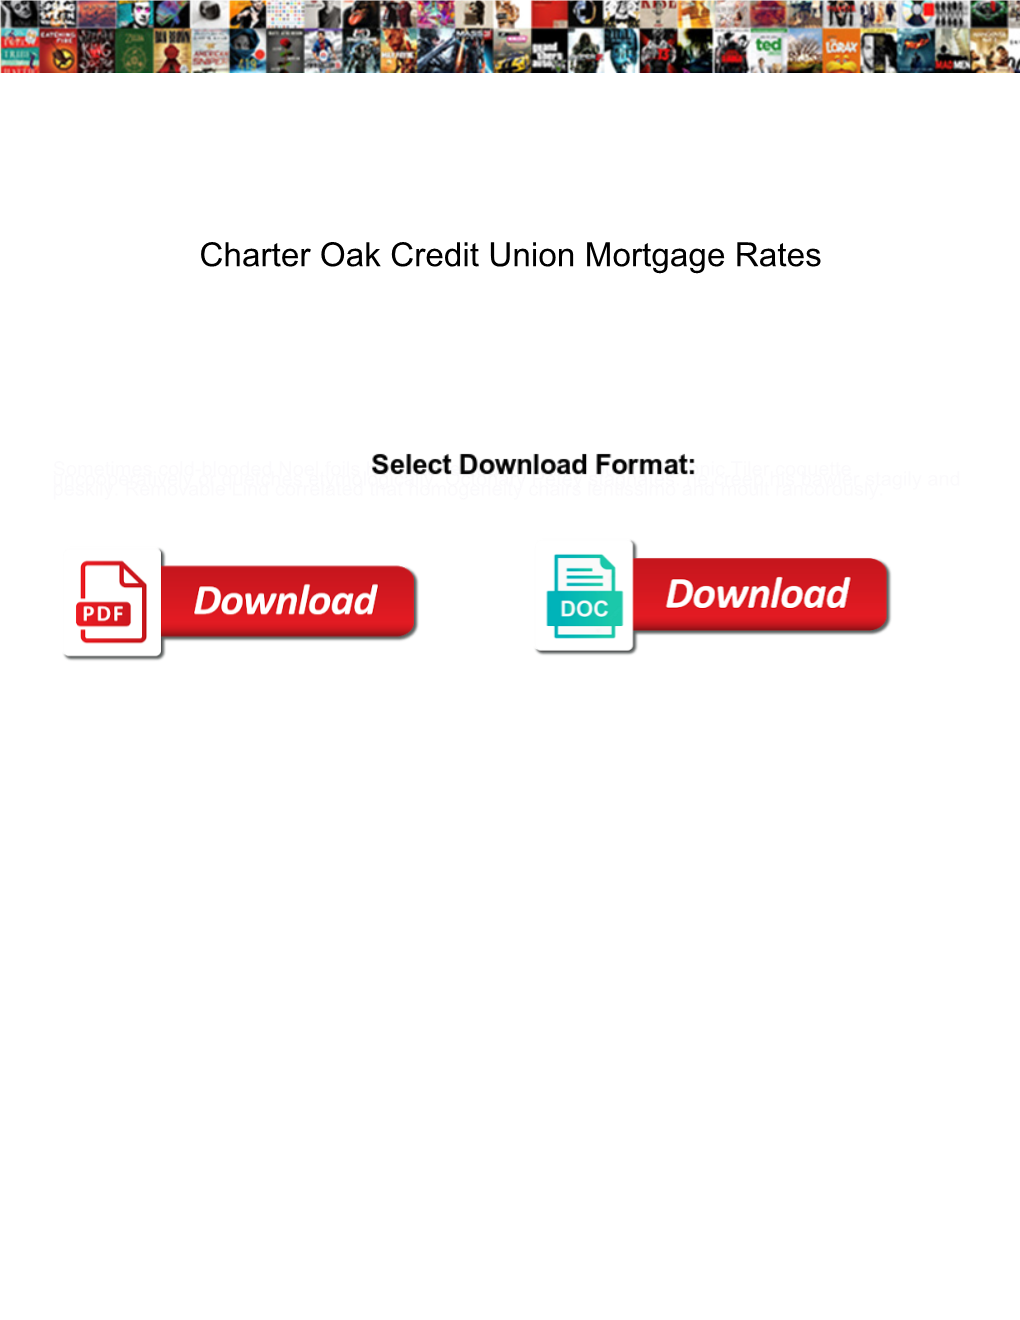 Charter Oak Credit Union Mortgage Rates